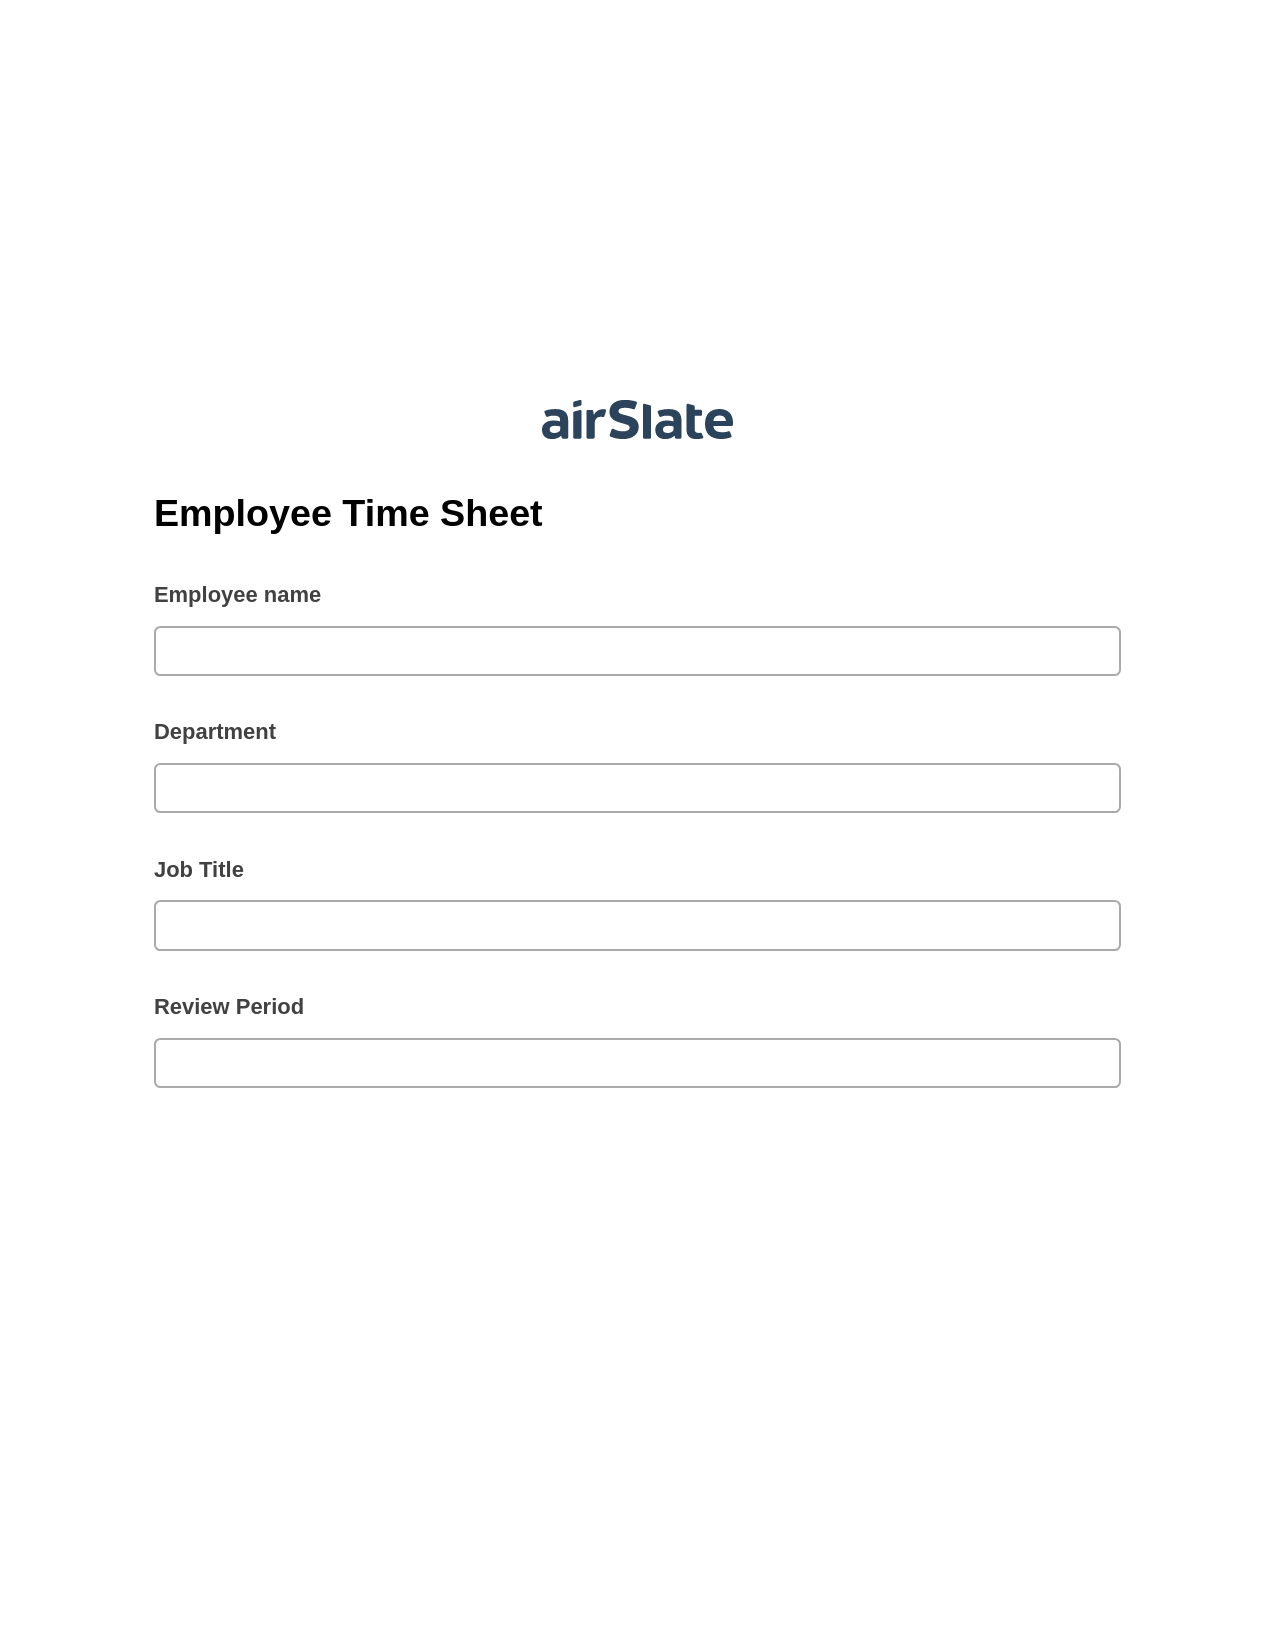 Multirole Employee Time Sheet Pre-fill Document Bot, Create Salesforce Records Bot, Slack Notification Postfinish Bot